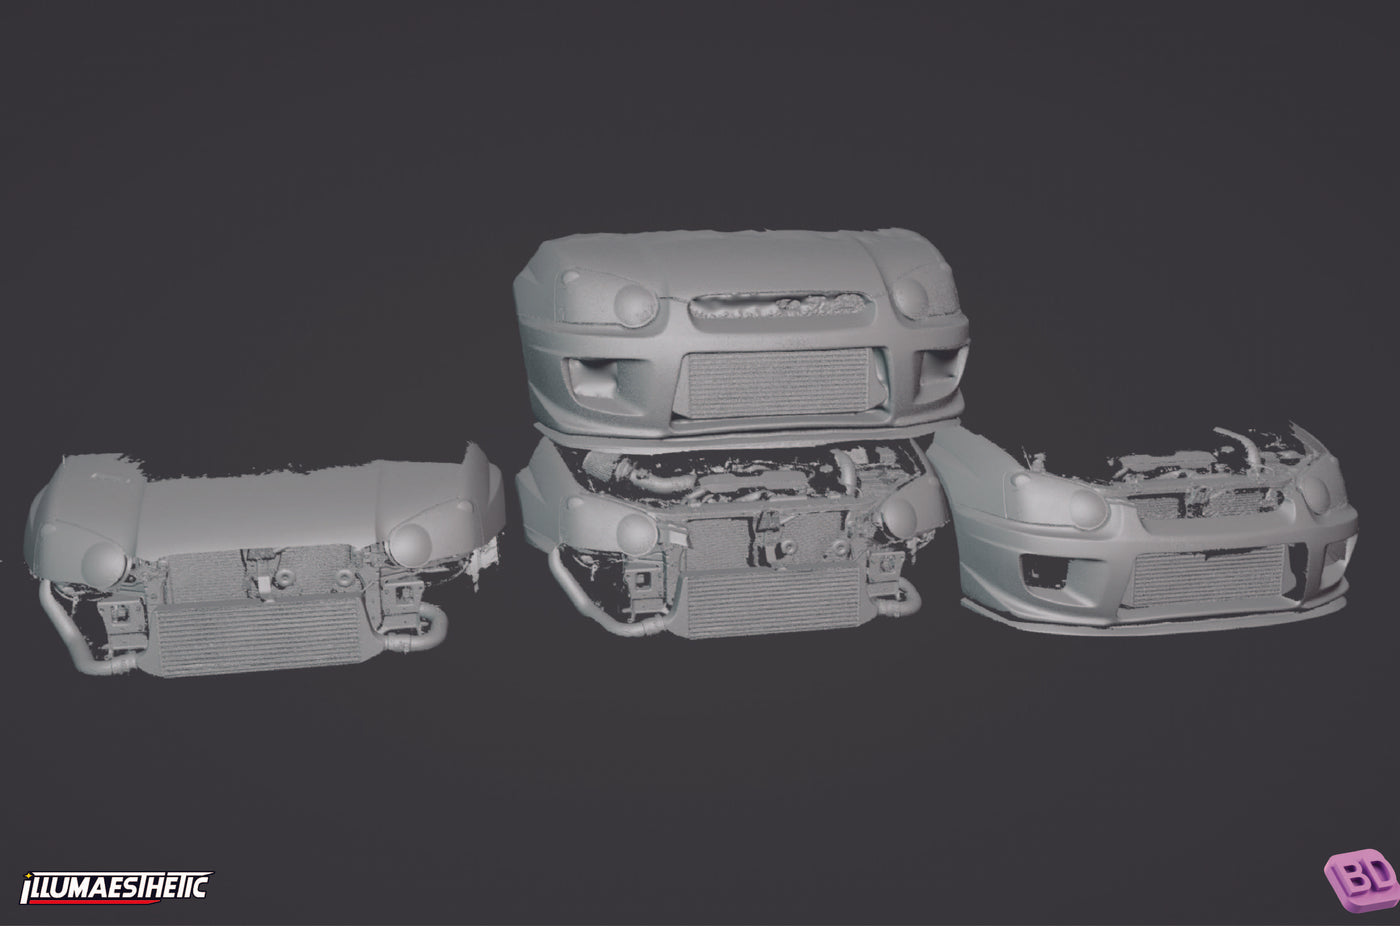 Subaru Impreza Blobeye (GD) 3D Scan (2004-2005)